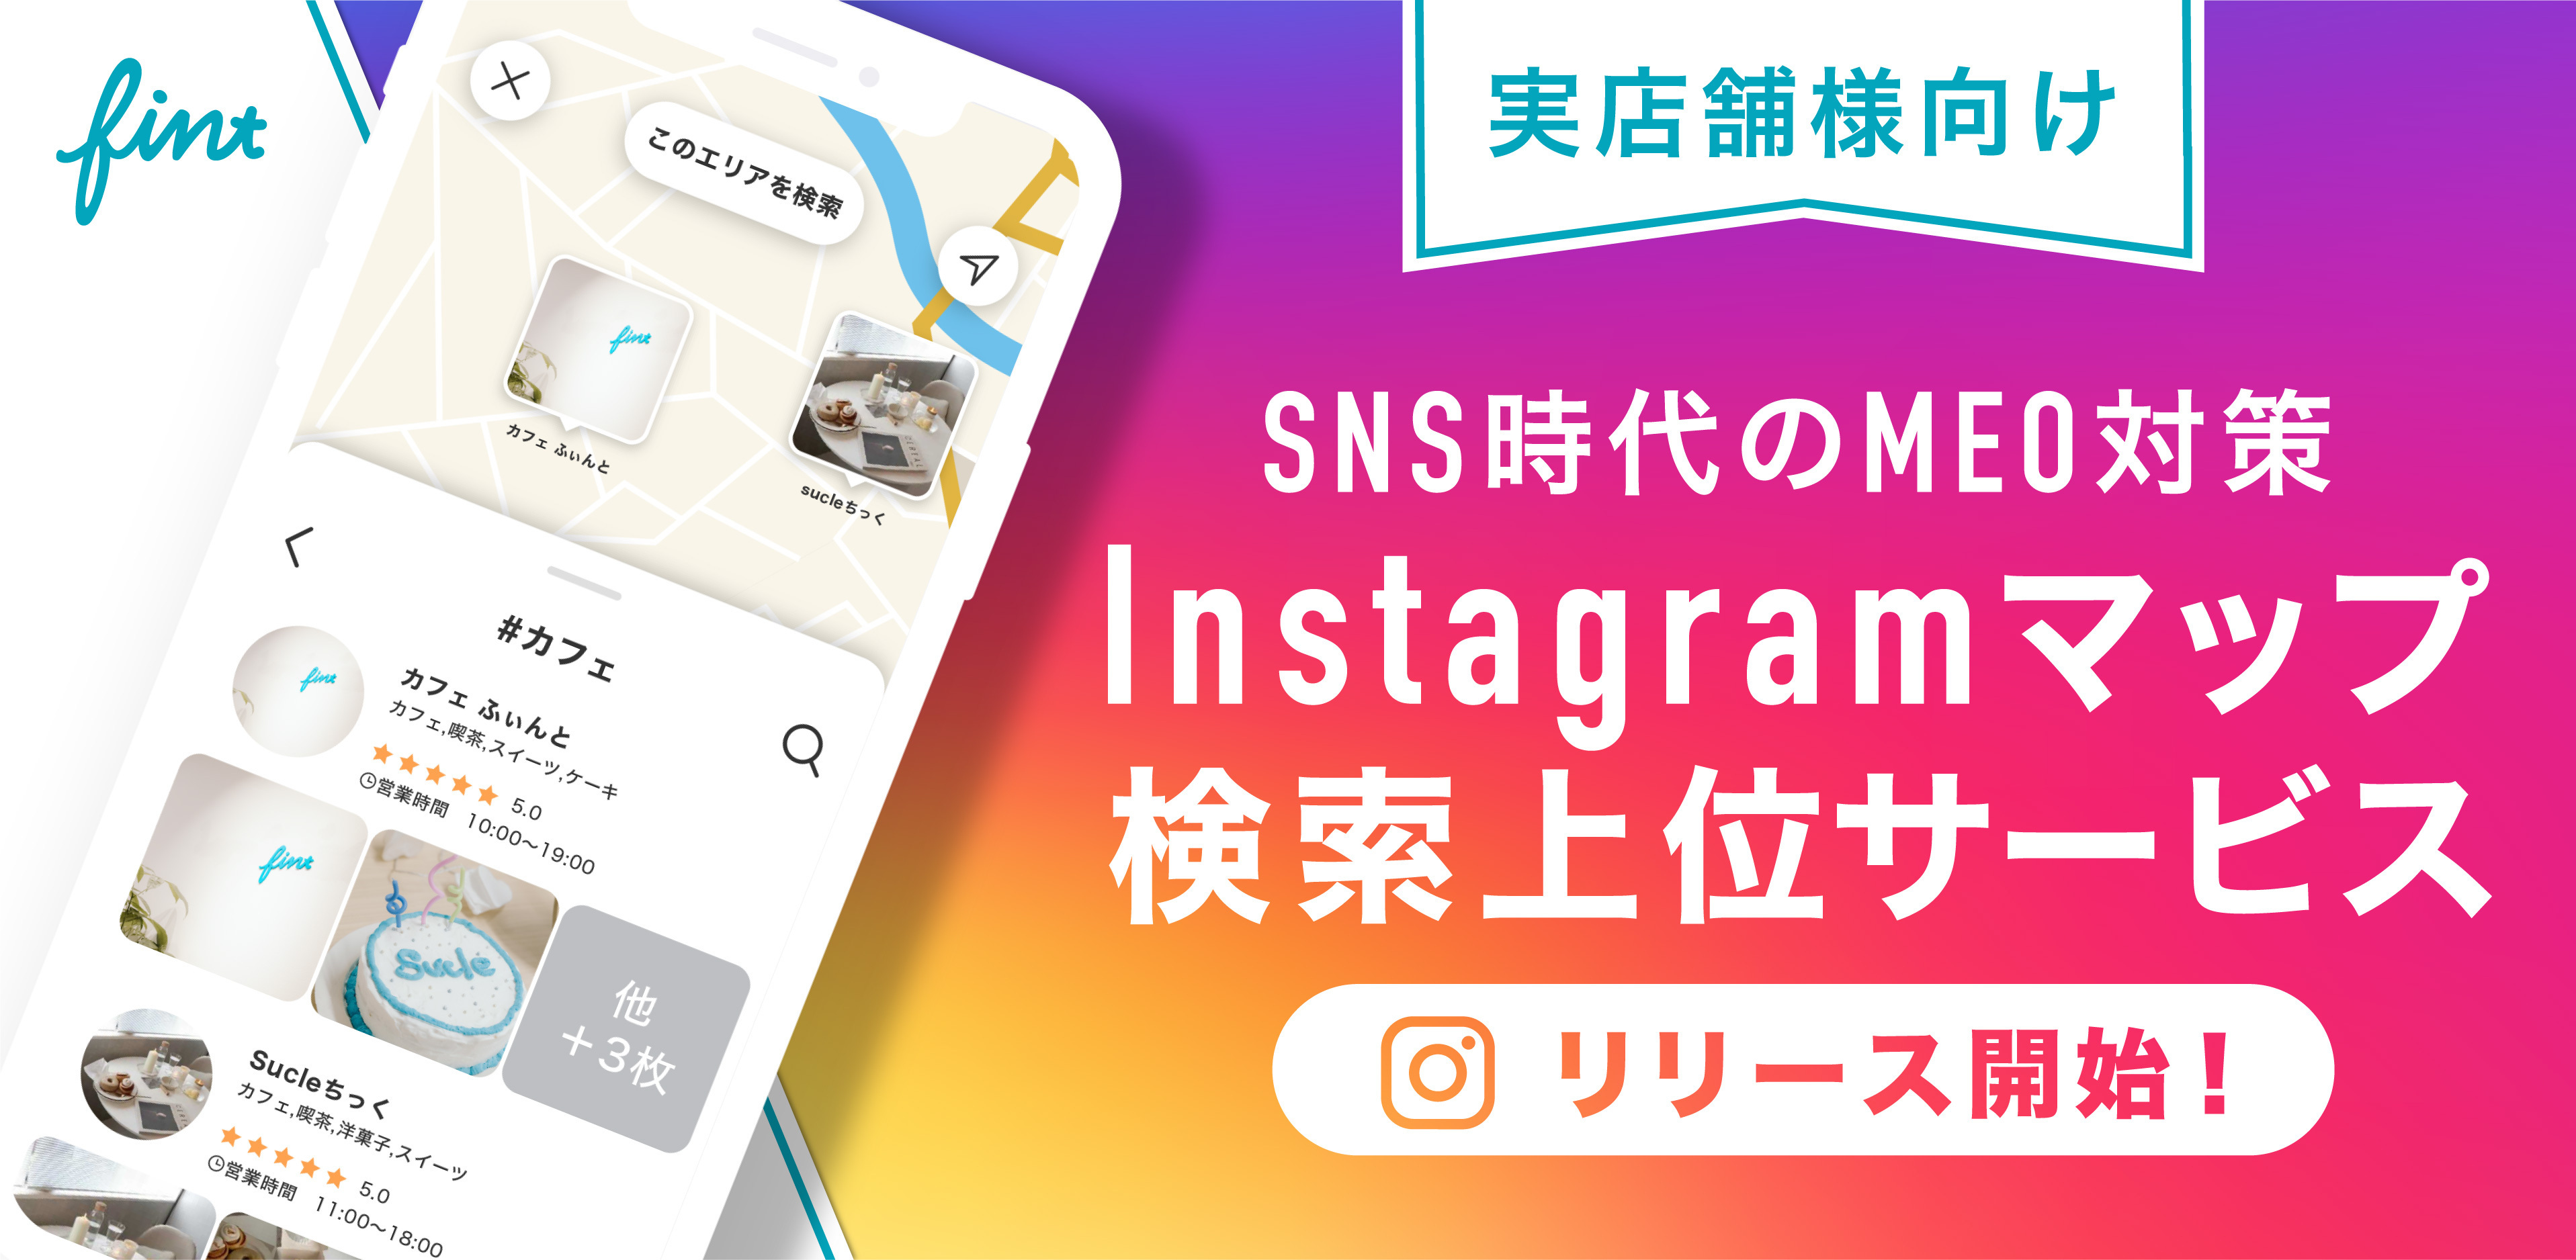 Snsマーケティング事業を展開する 株 Fintが インスタ版のmeo対策 Map Engine Optimization Instagram マップ検索上位サービス を提供開始 株式会社fintのプレスリリース